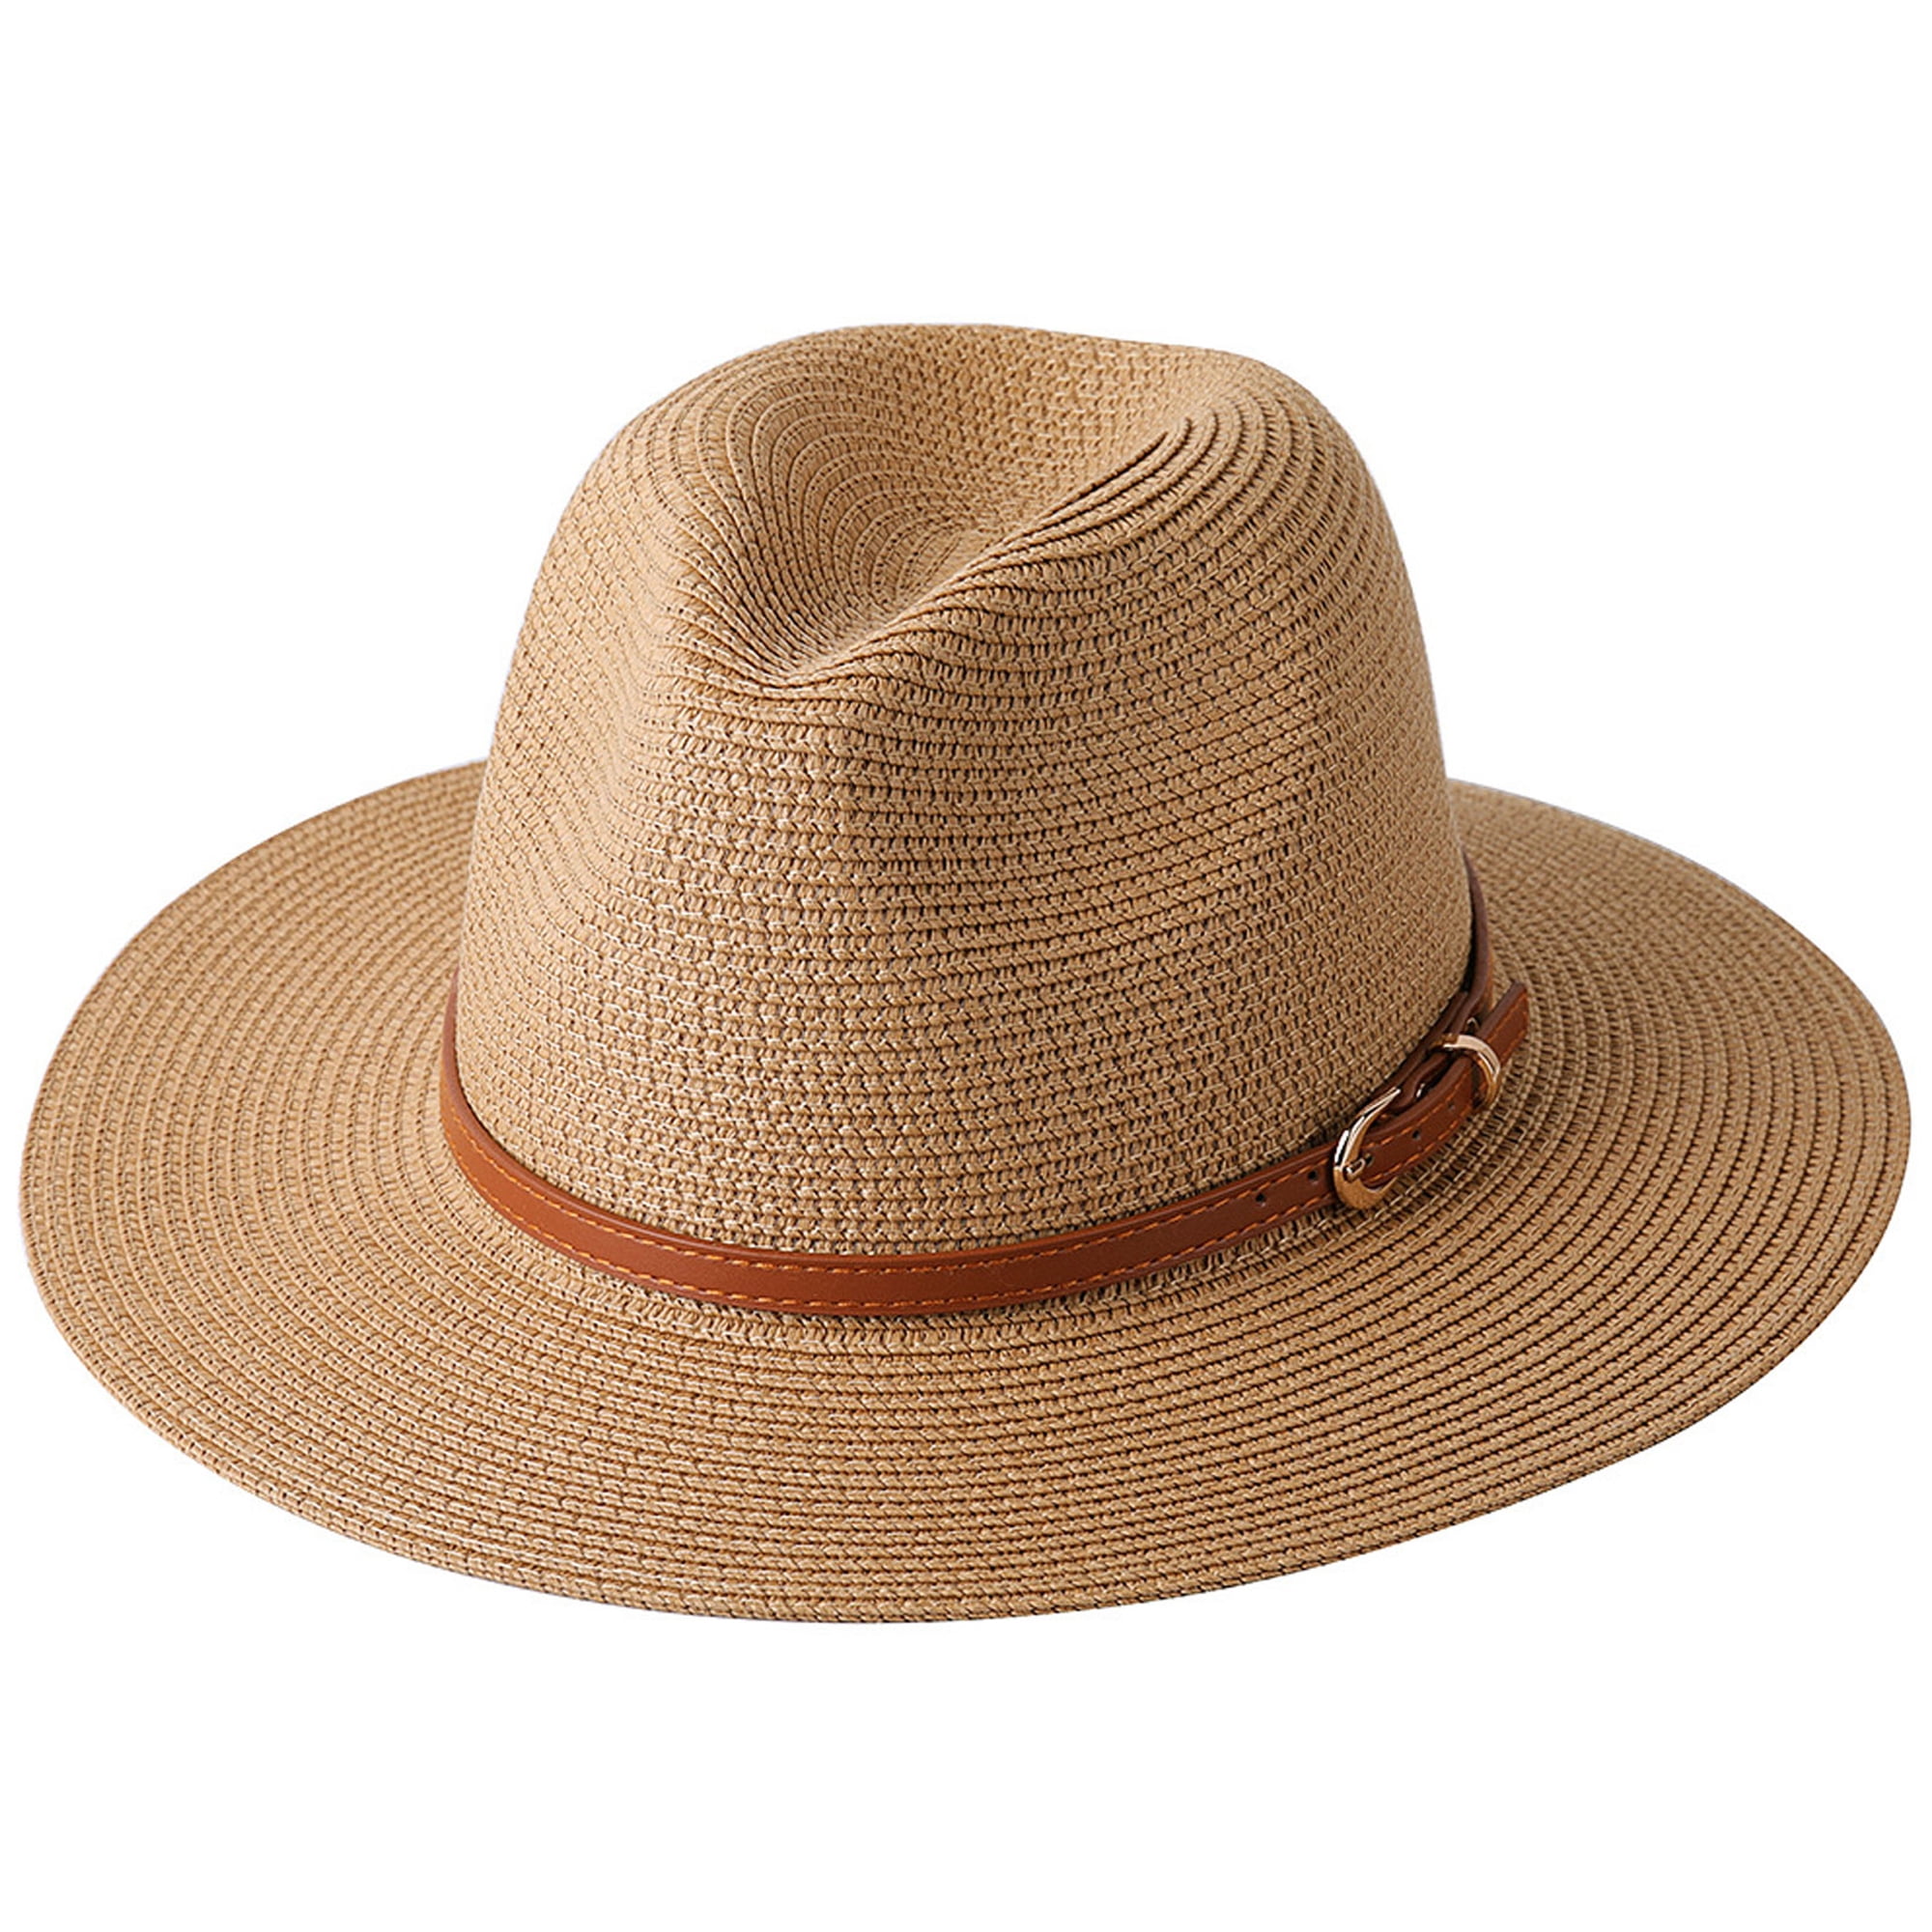 SUNSIOM Women Summer Wide Brim Straw Panama Roll Up Hat Fedora Beach Sun Hat  for Travel Outdoor 